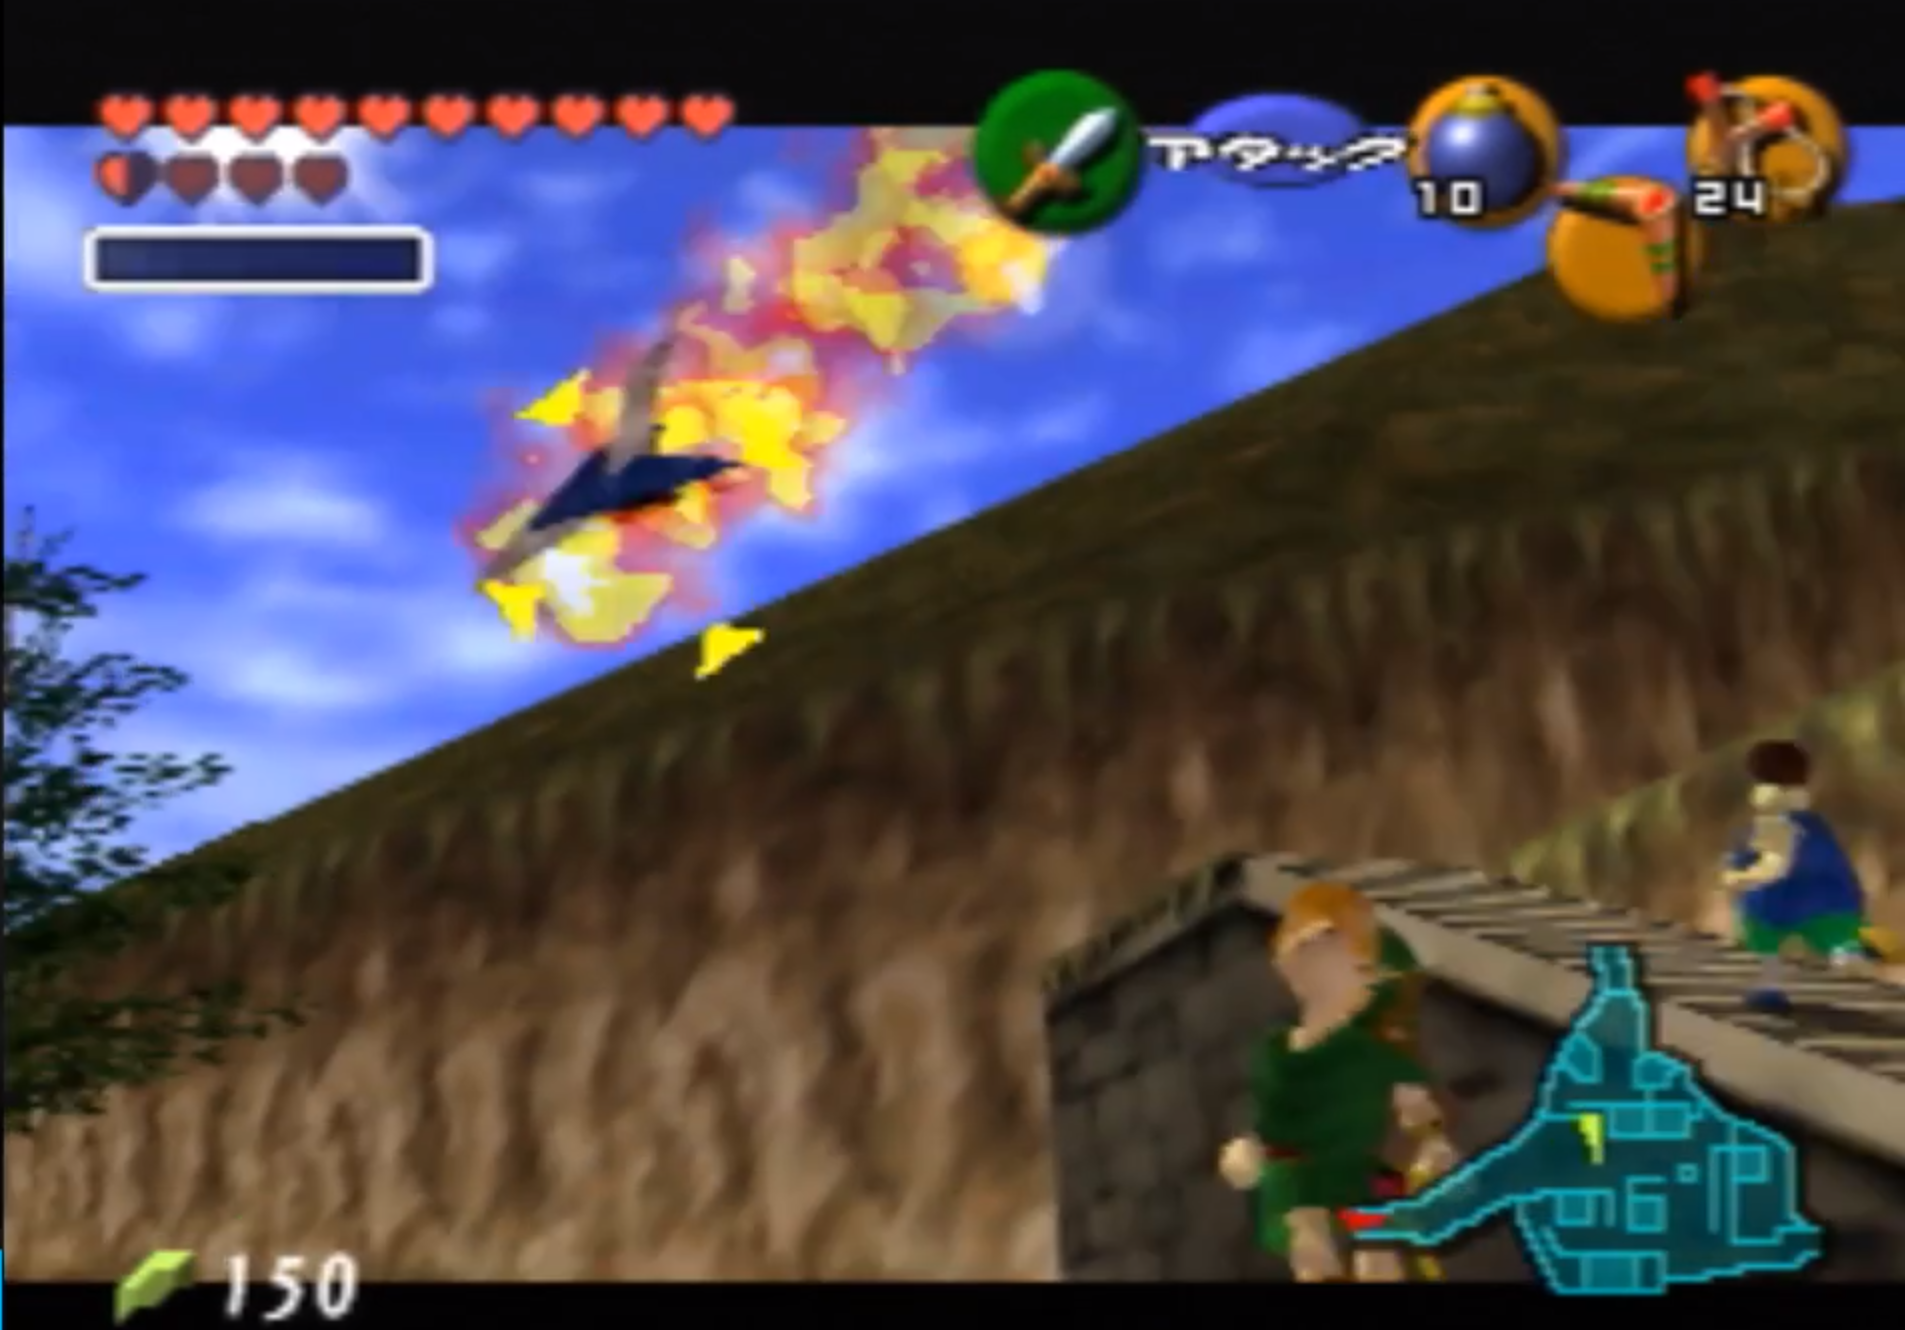 N64 games like 'Ocarina' run like garbage on Nintendo Switch